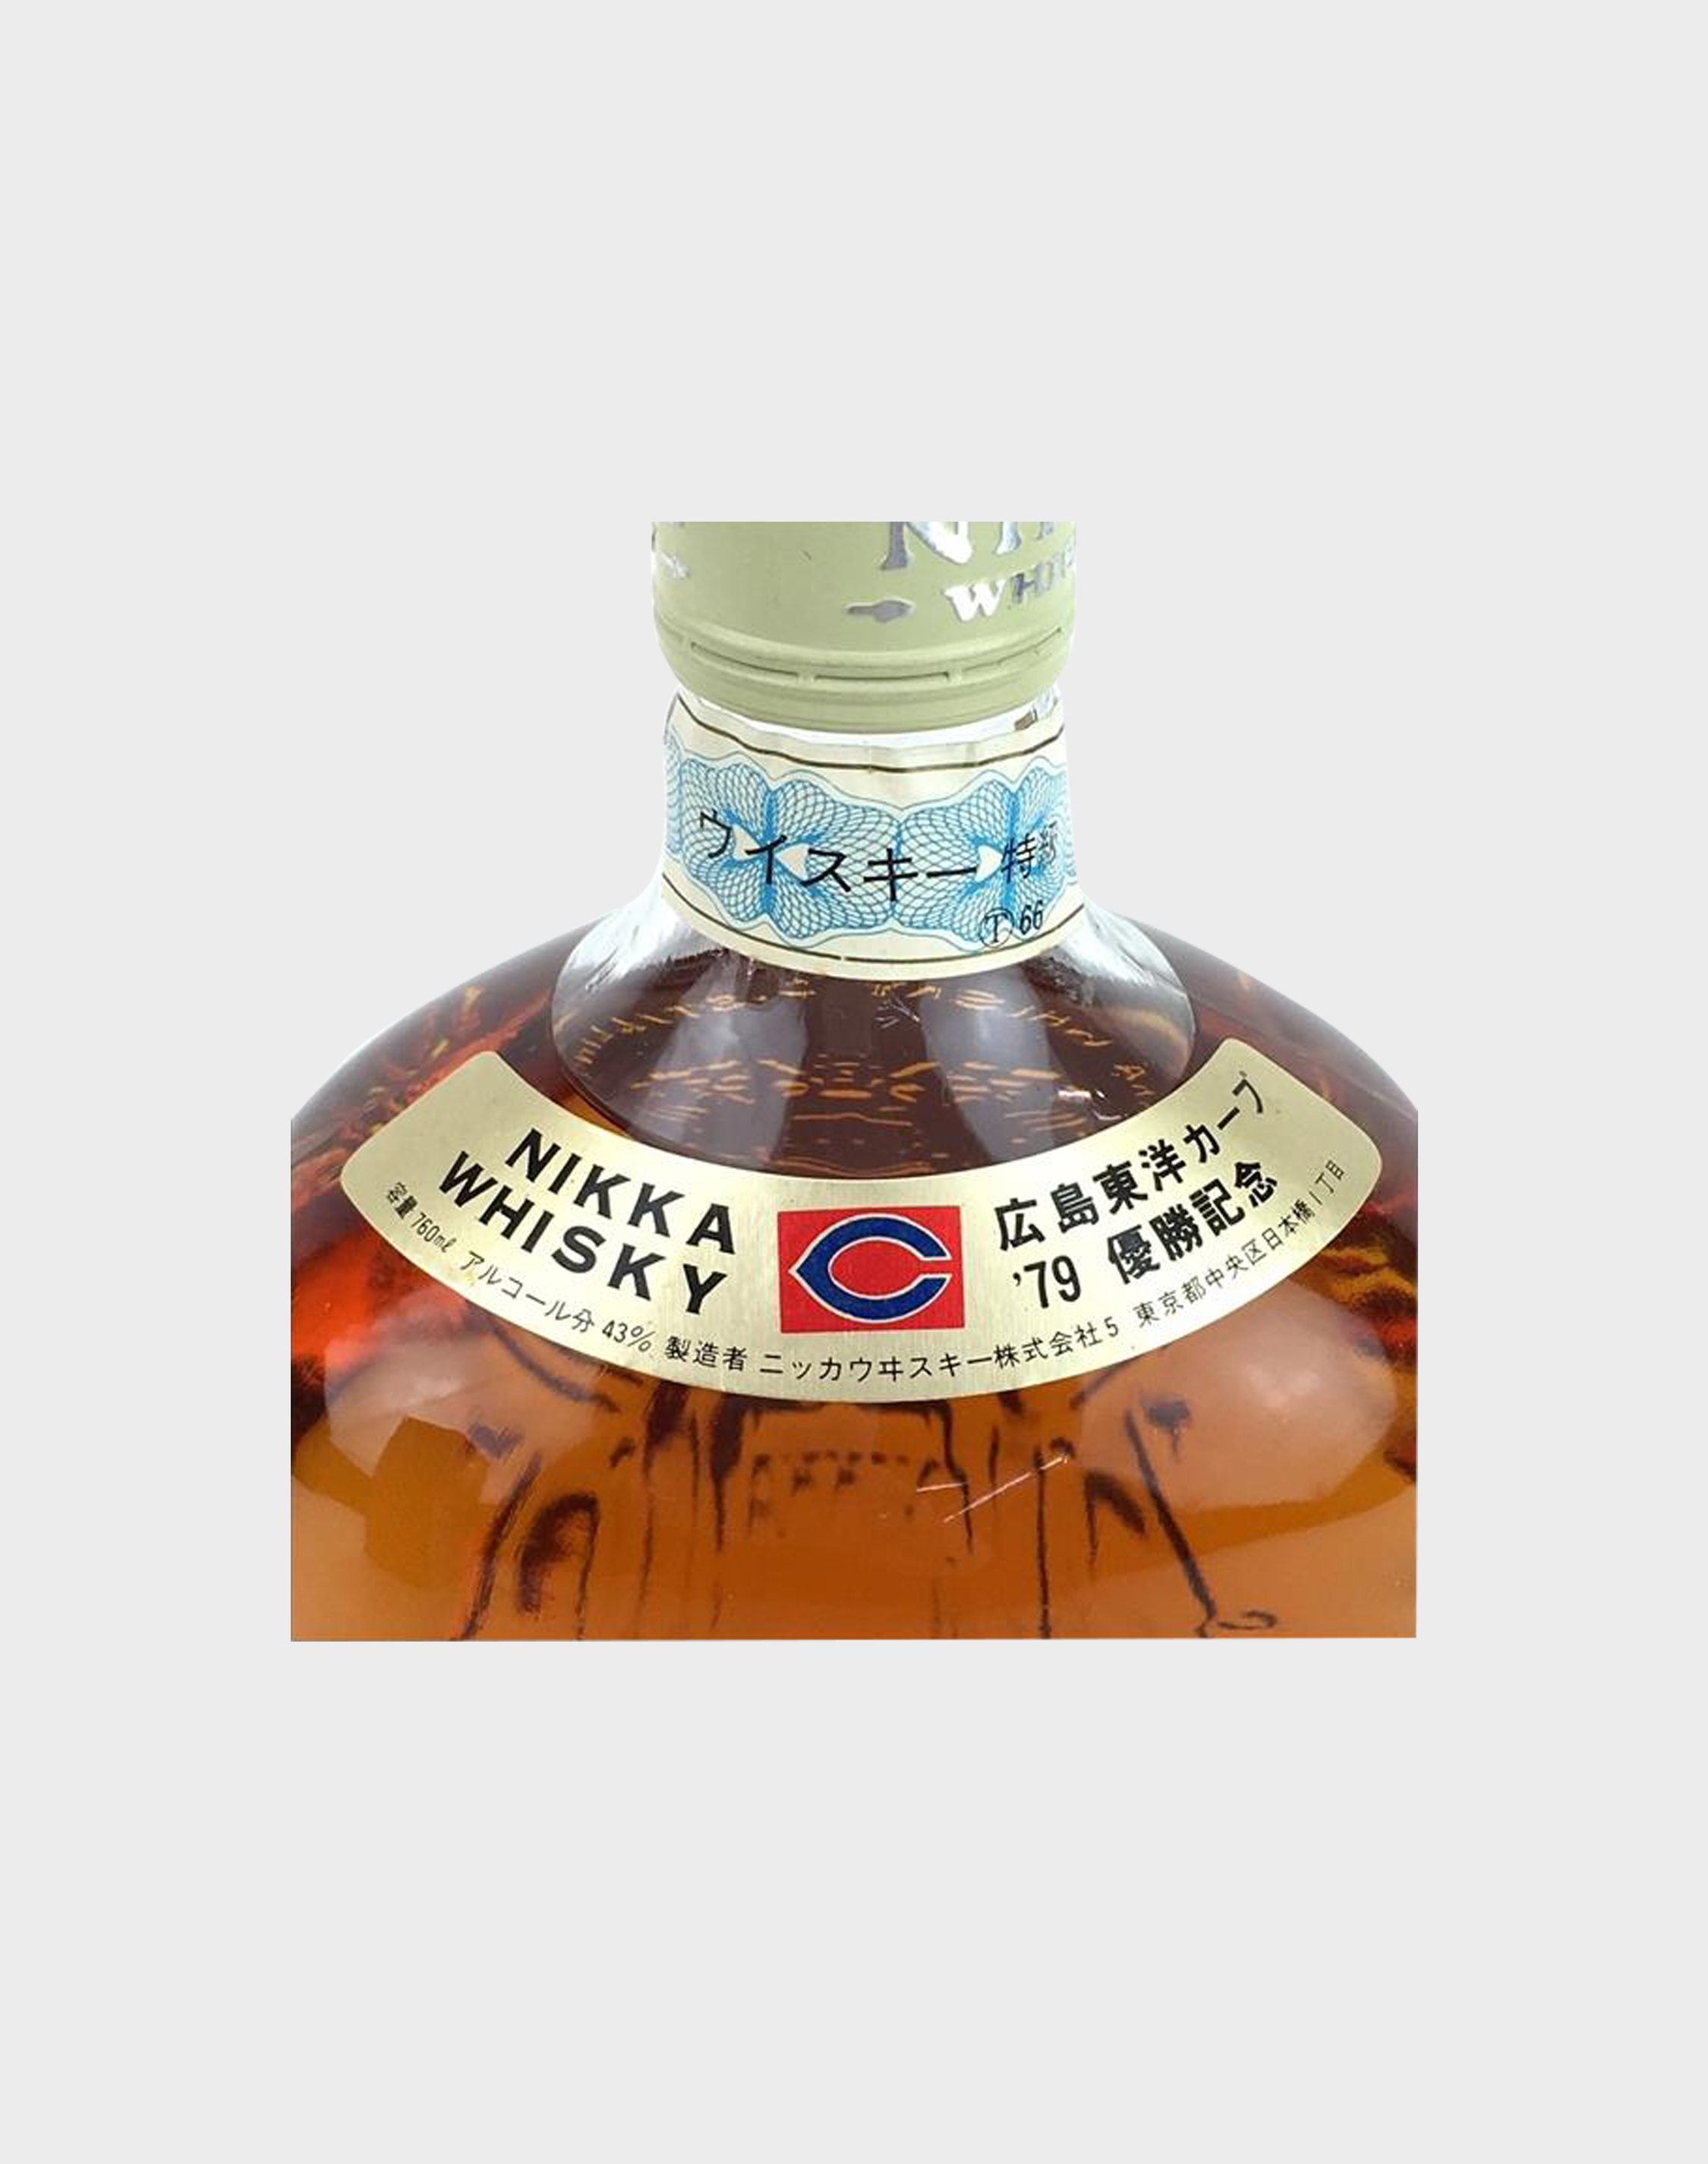 Nikka Whisky G and G 1979 Hiroshima Toyo Carp Victory Japanese Whisky Dekantā